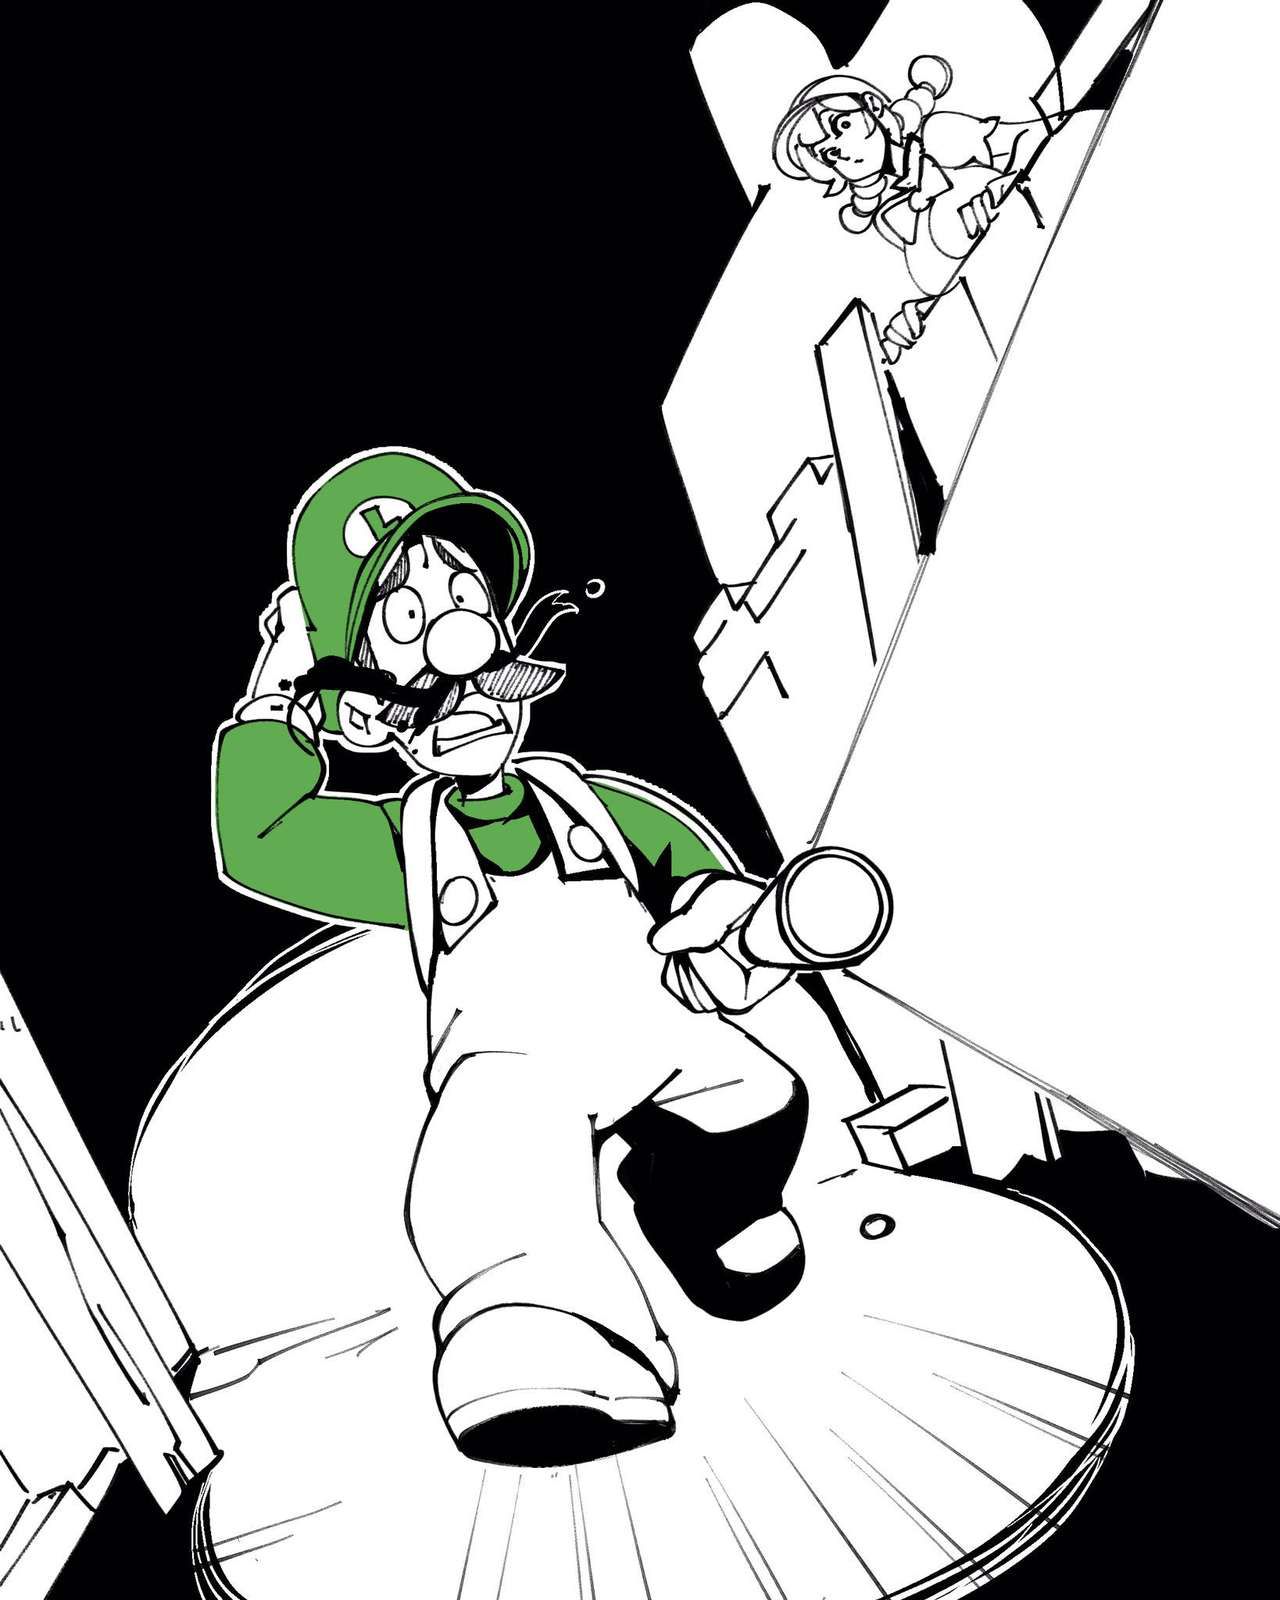 [Nisego] Inktober 2 - Luigi's Mansion (Super Mario Bros.) [Ongoing] 20